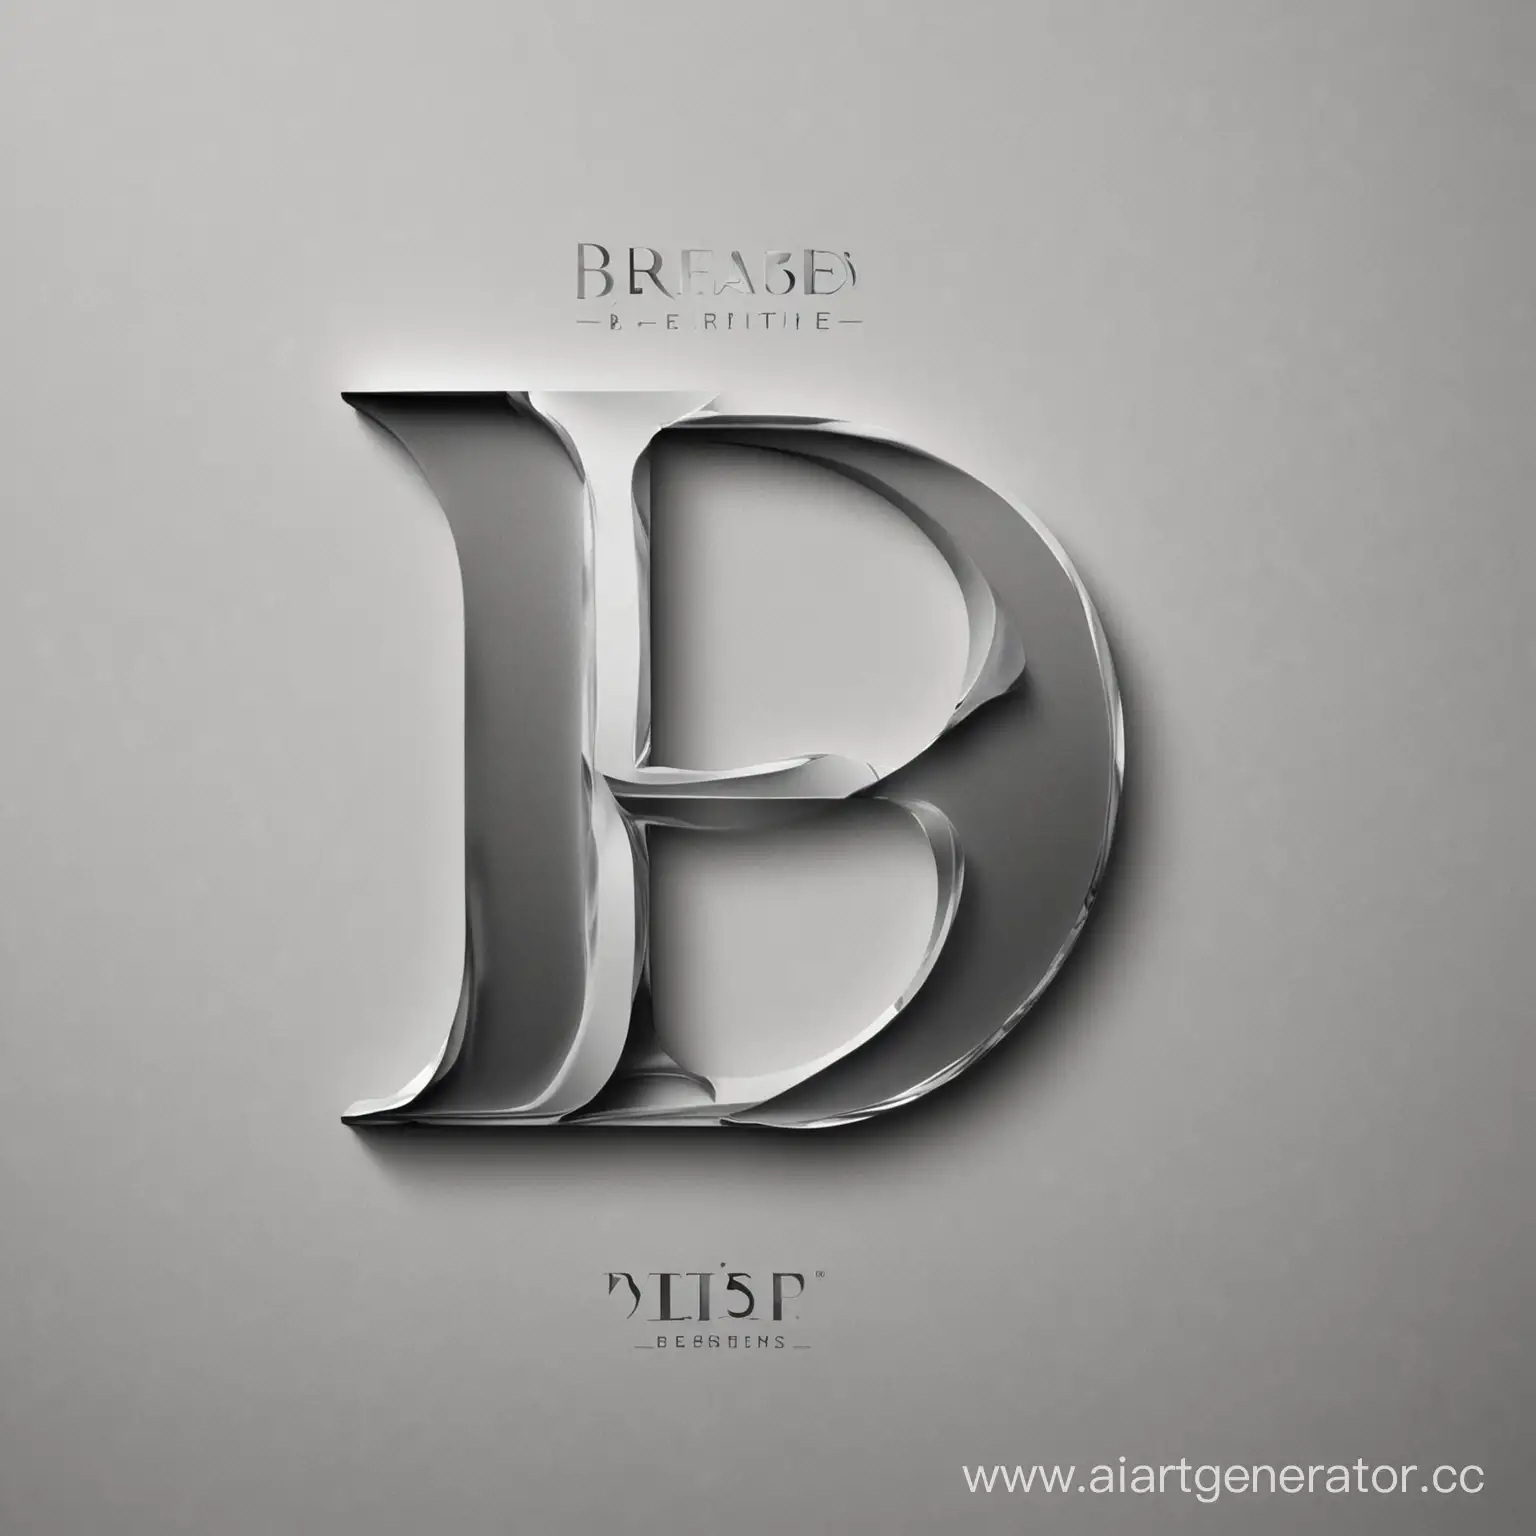 Bertier-Perfumery-and-Cosmetics-Store-Logo-on-Gray-Background